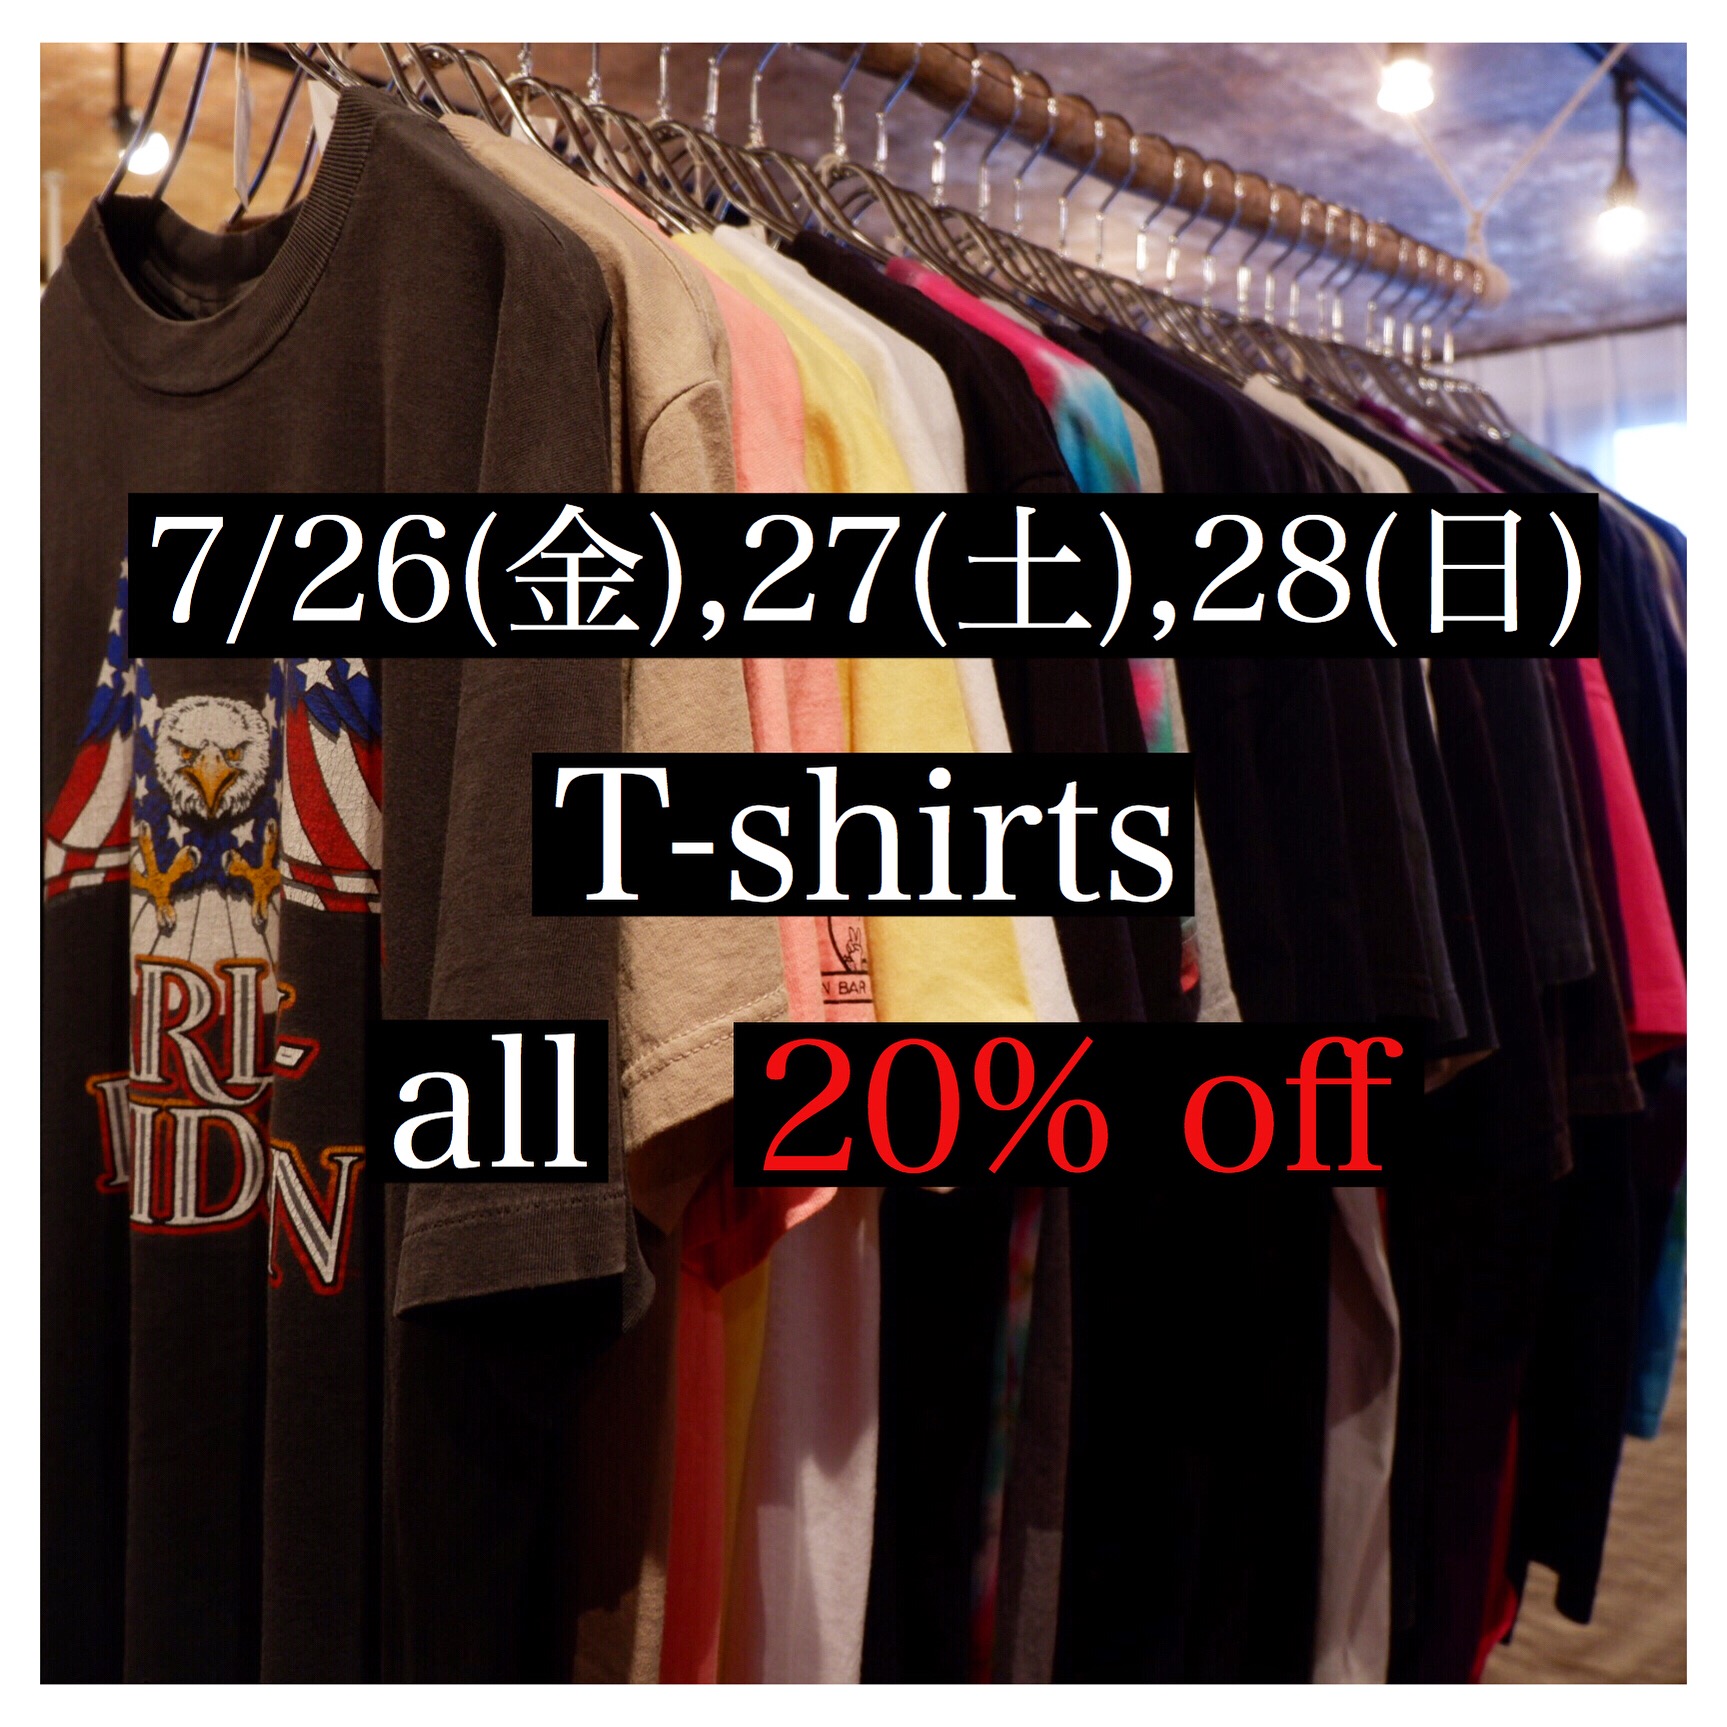 t-shirts 20%off sale!!